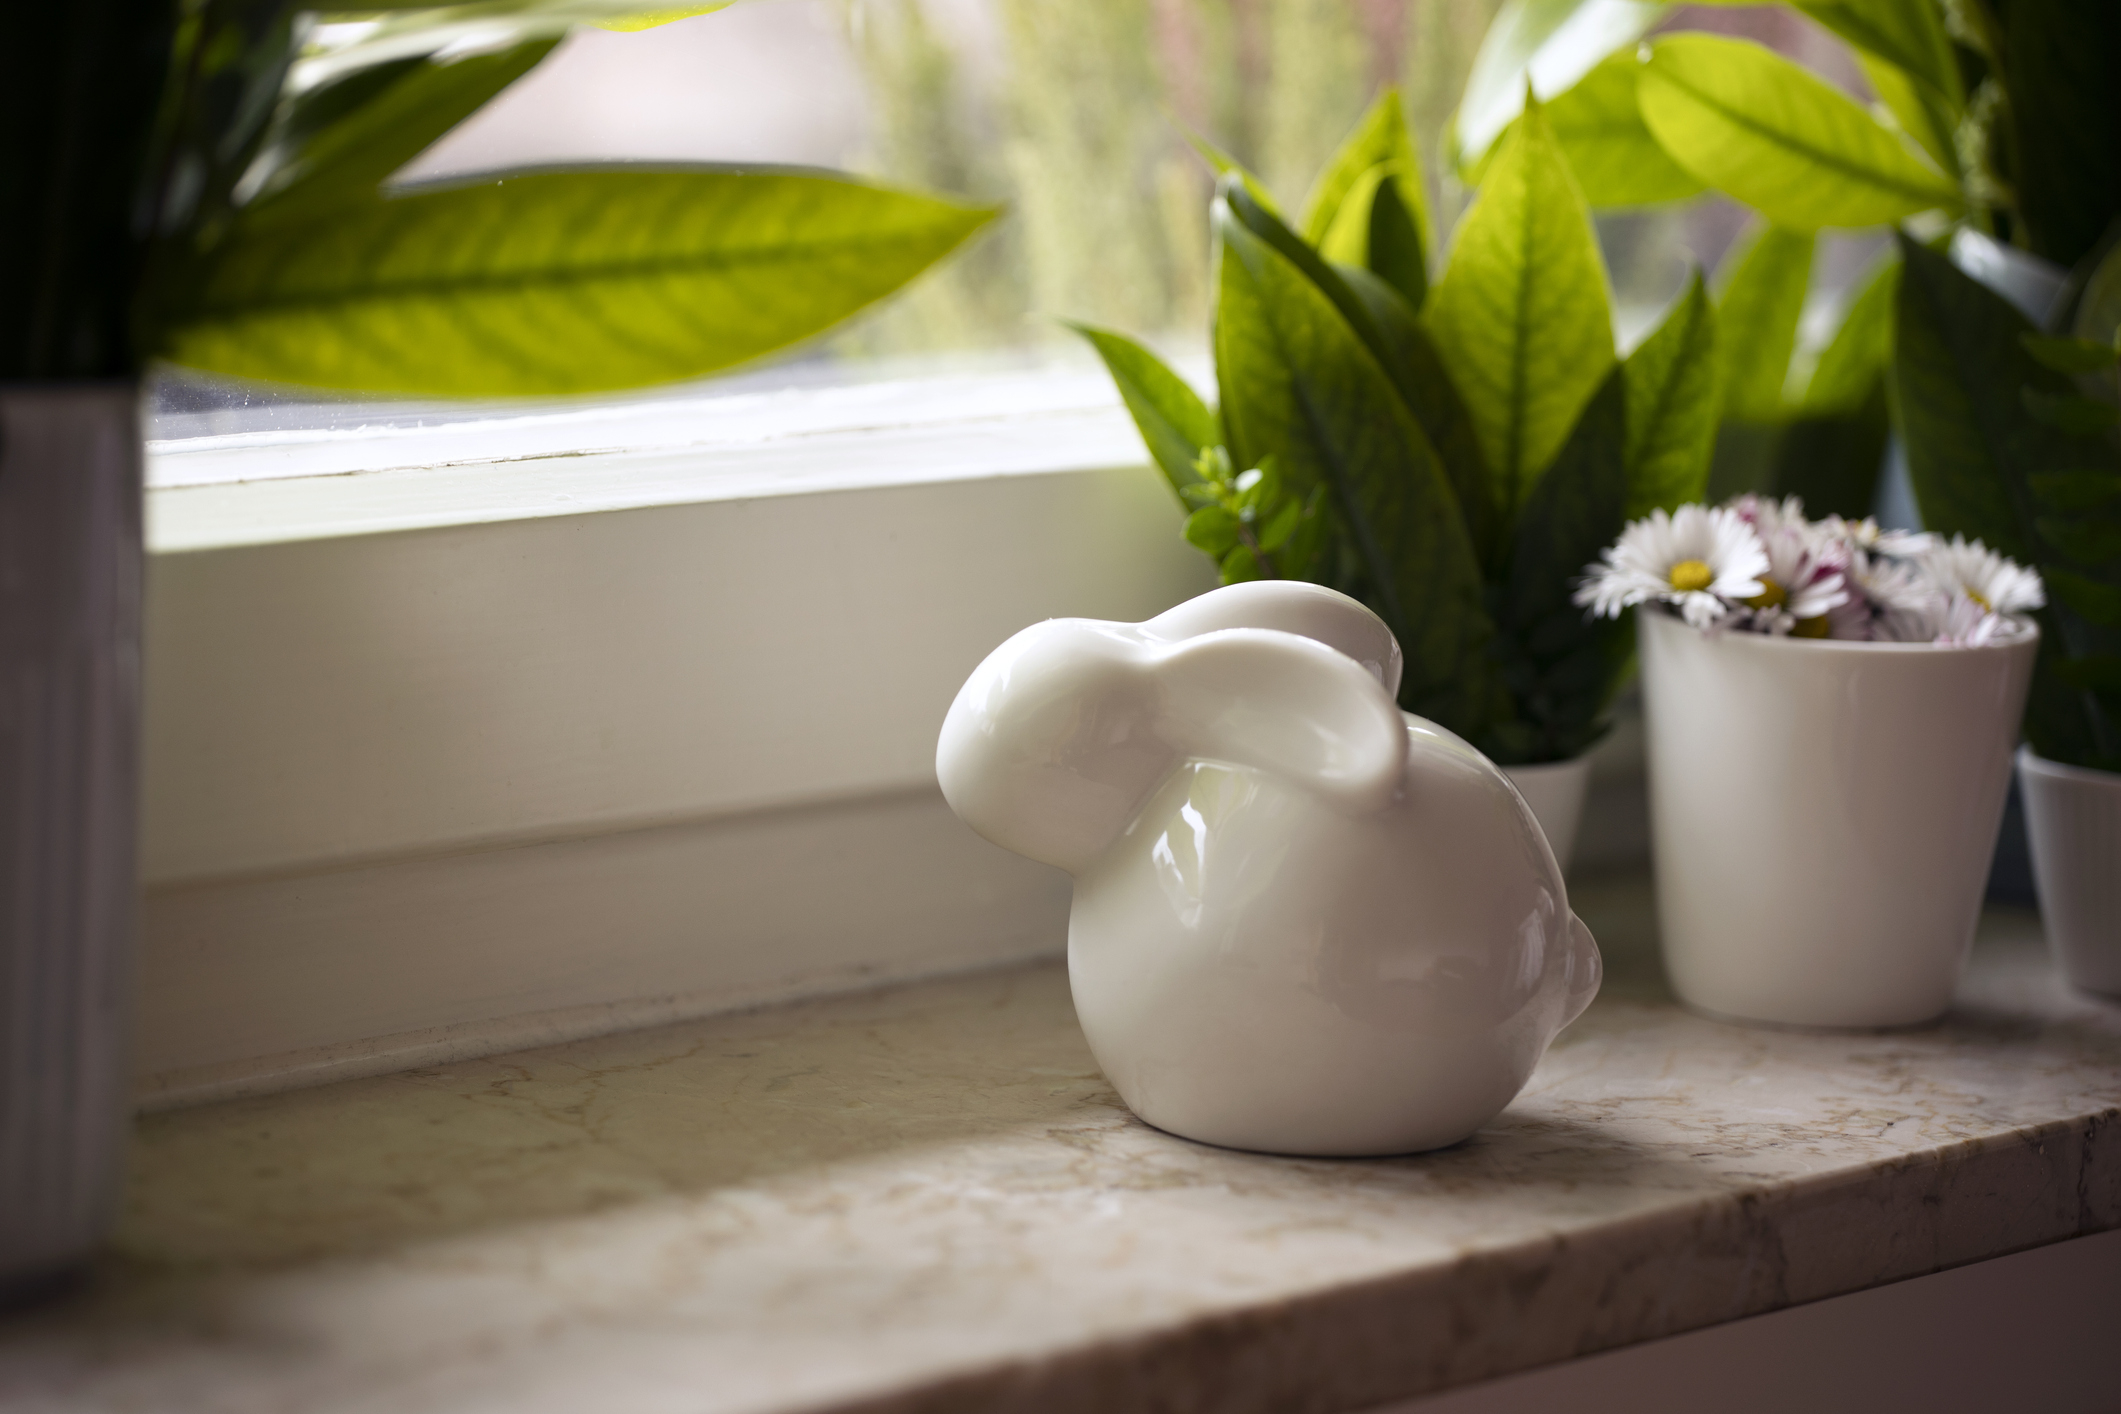 bunny decor on the windowsill with plants